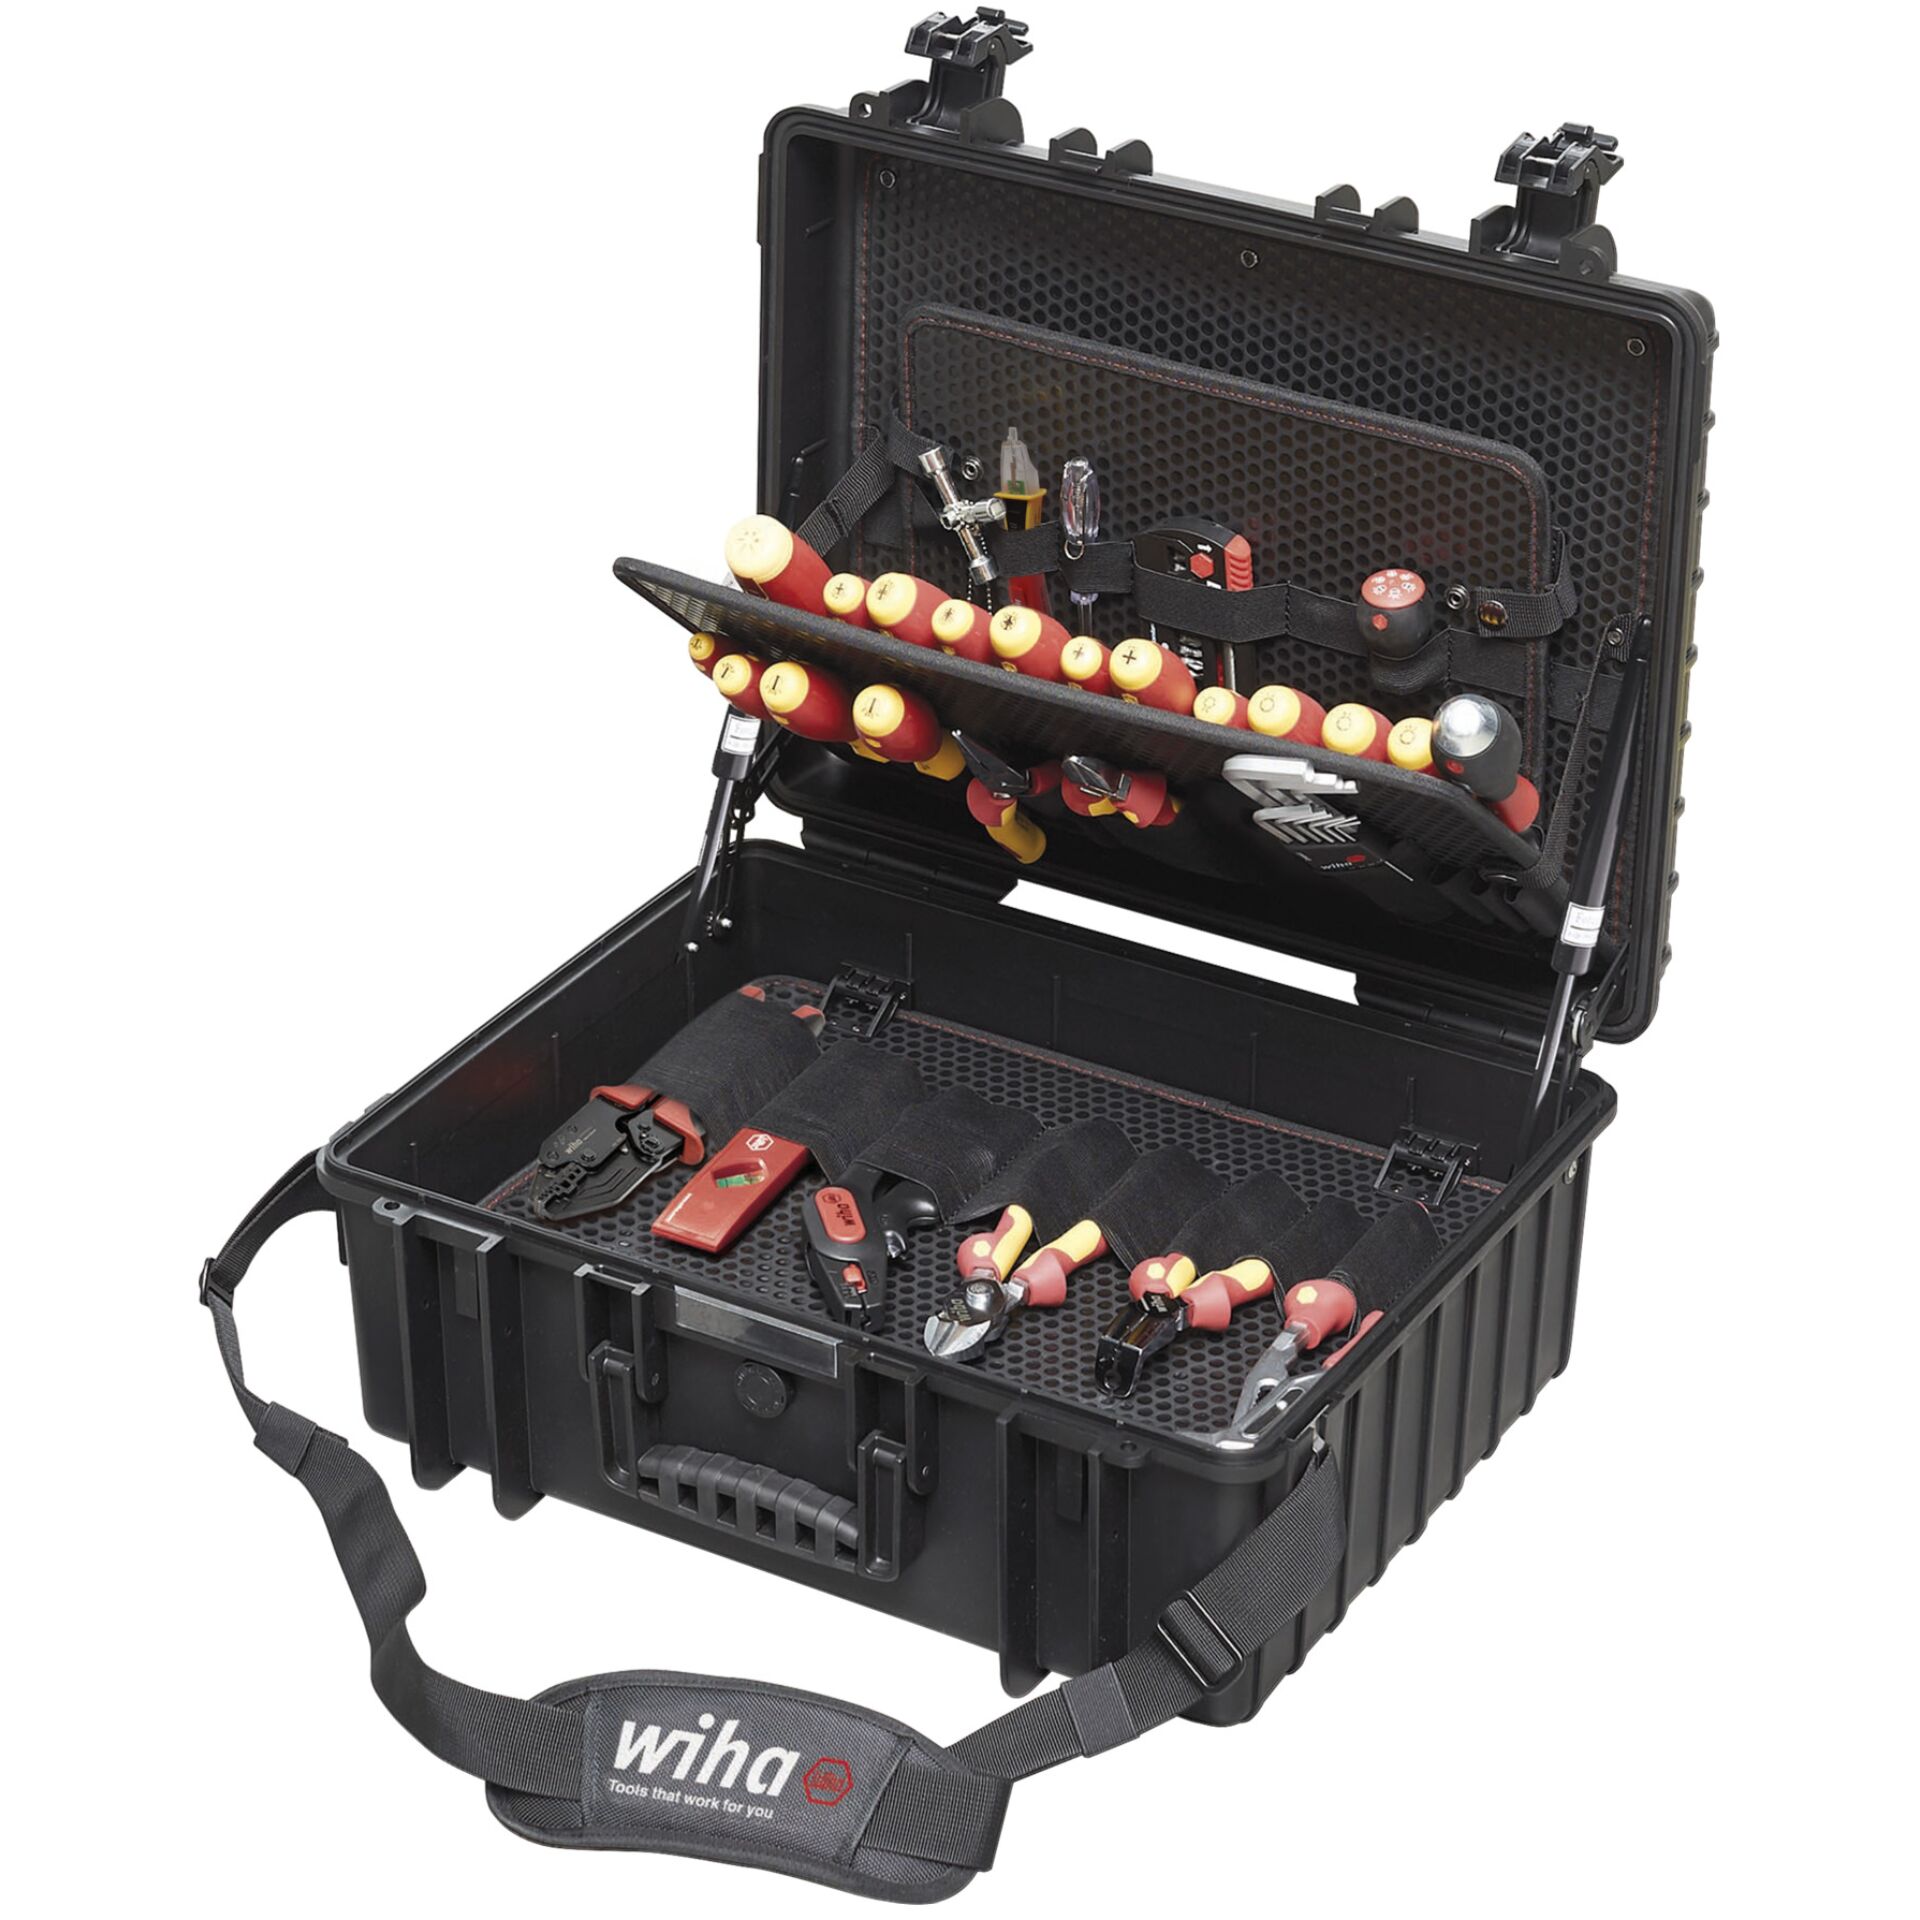 Wiha 9300-702 Tool kit Competence XL